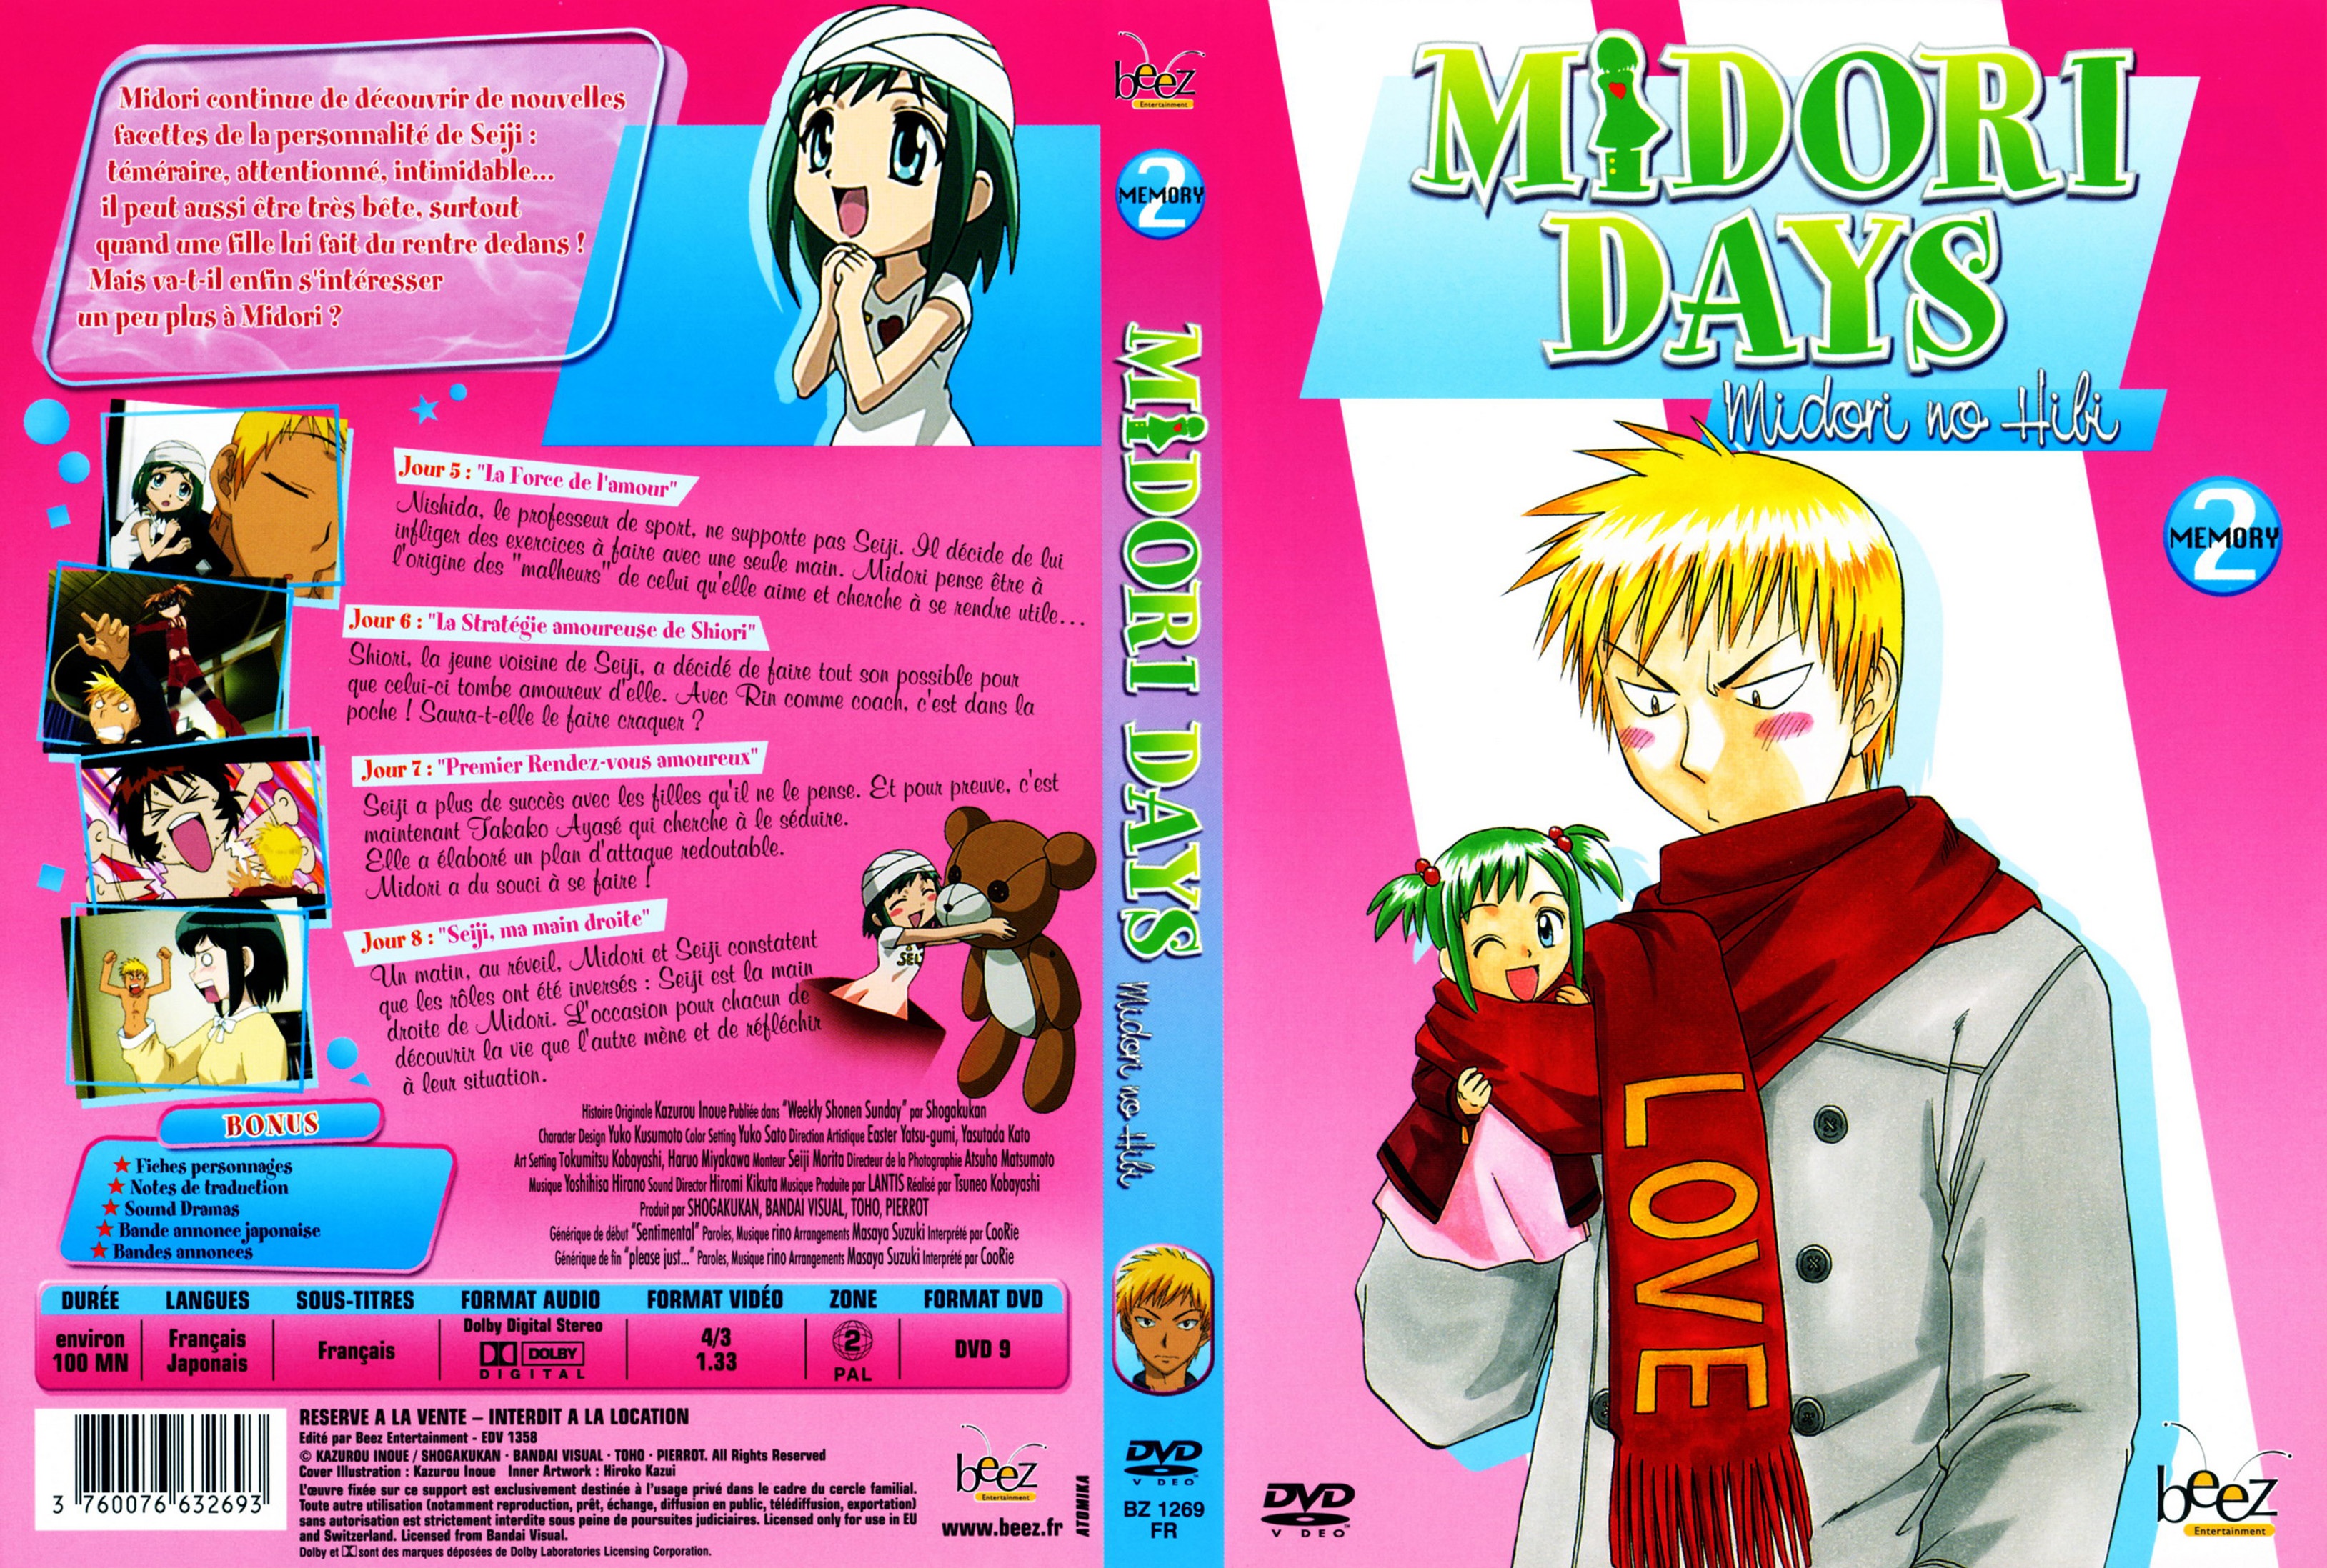 Jaquette DVD Midori days vol 2